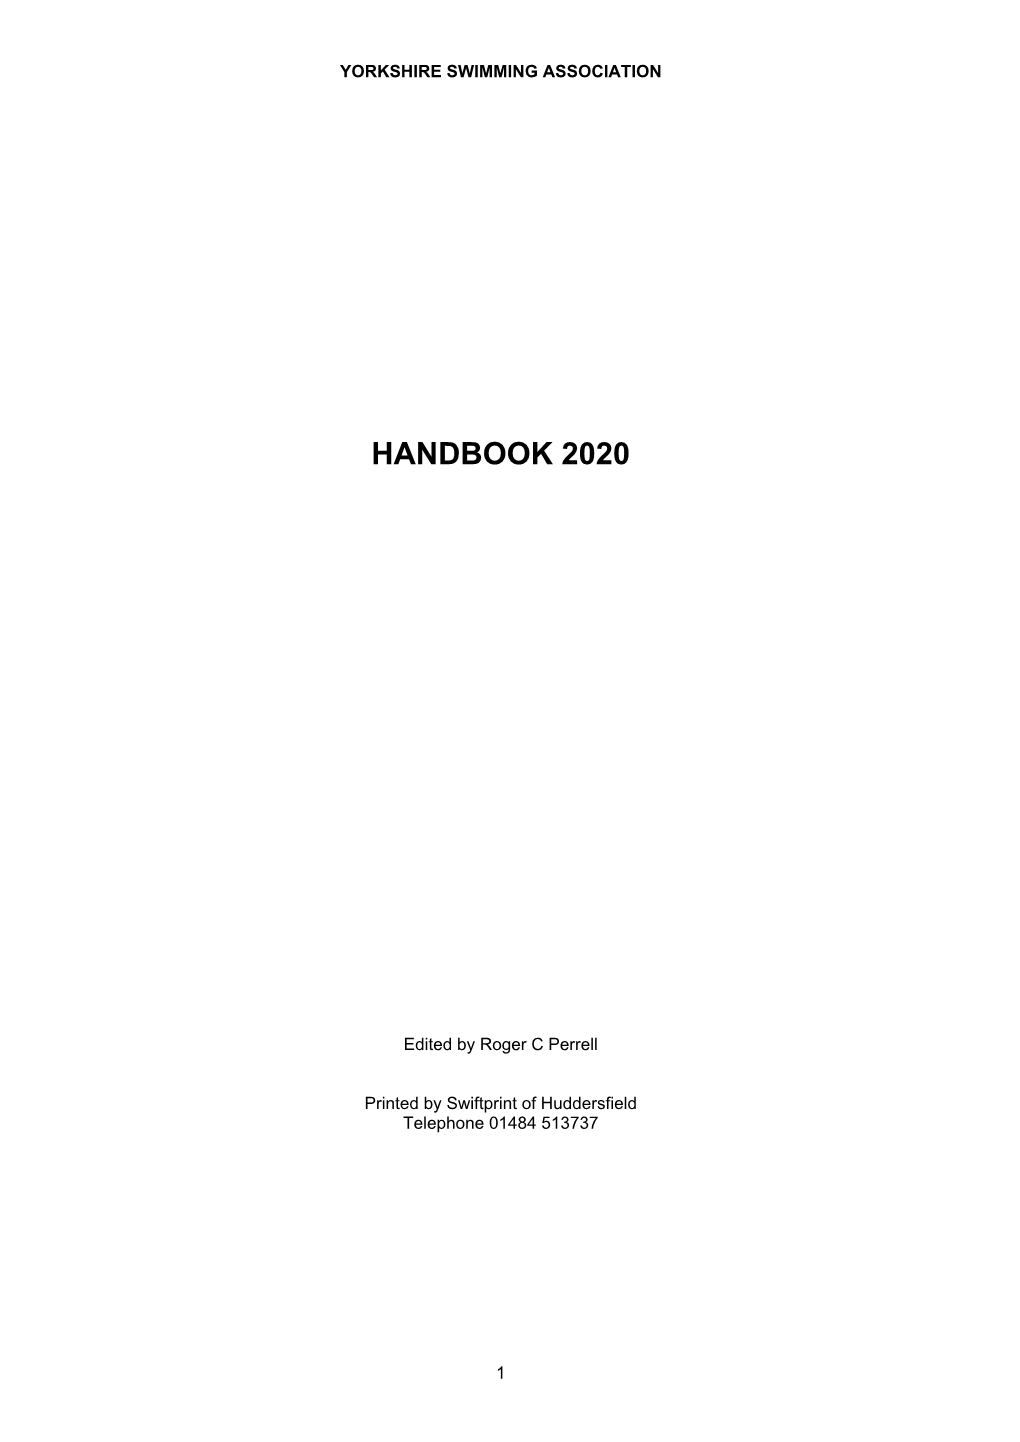 Handbook 2020